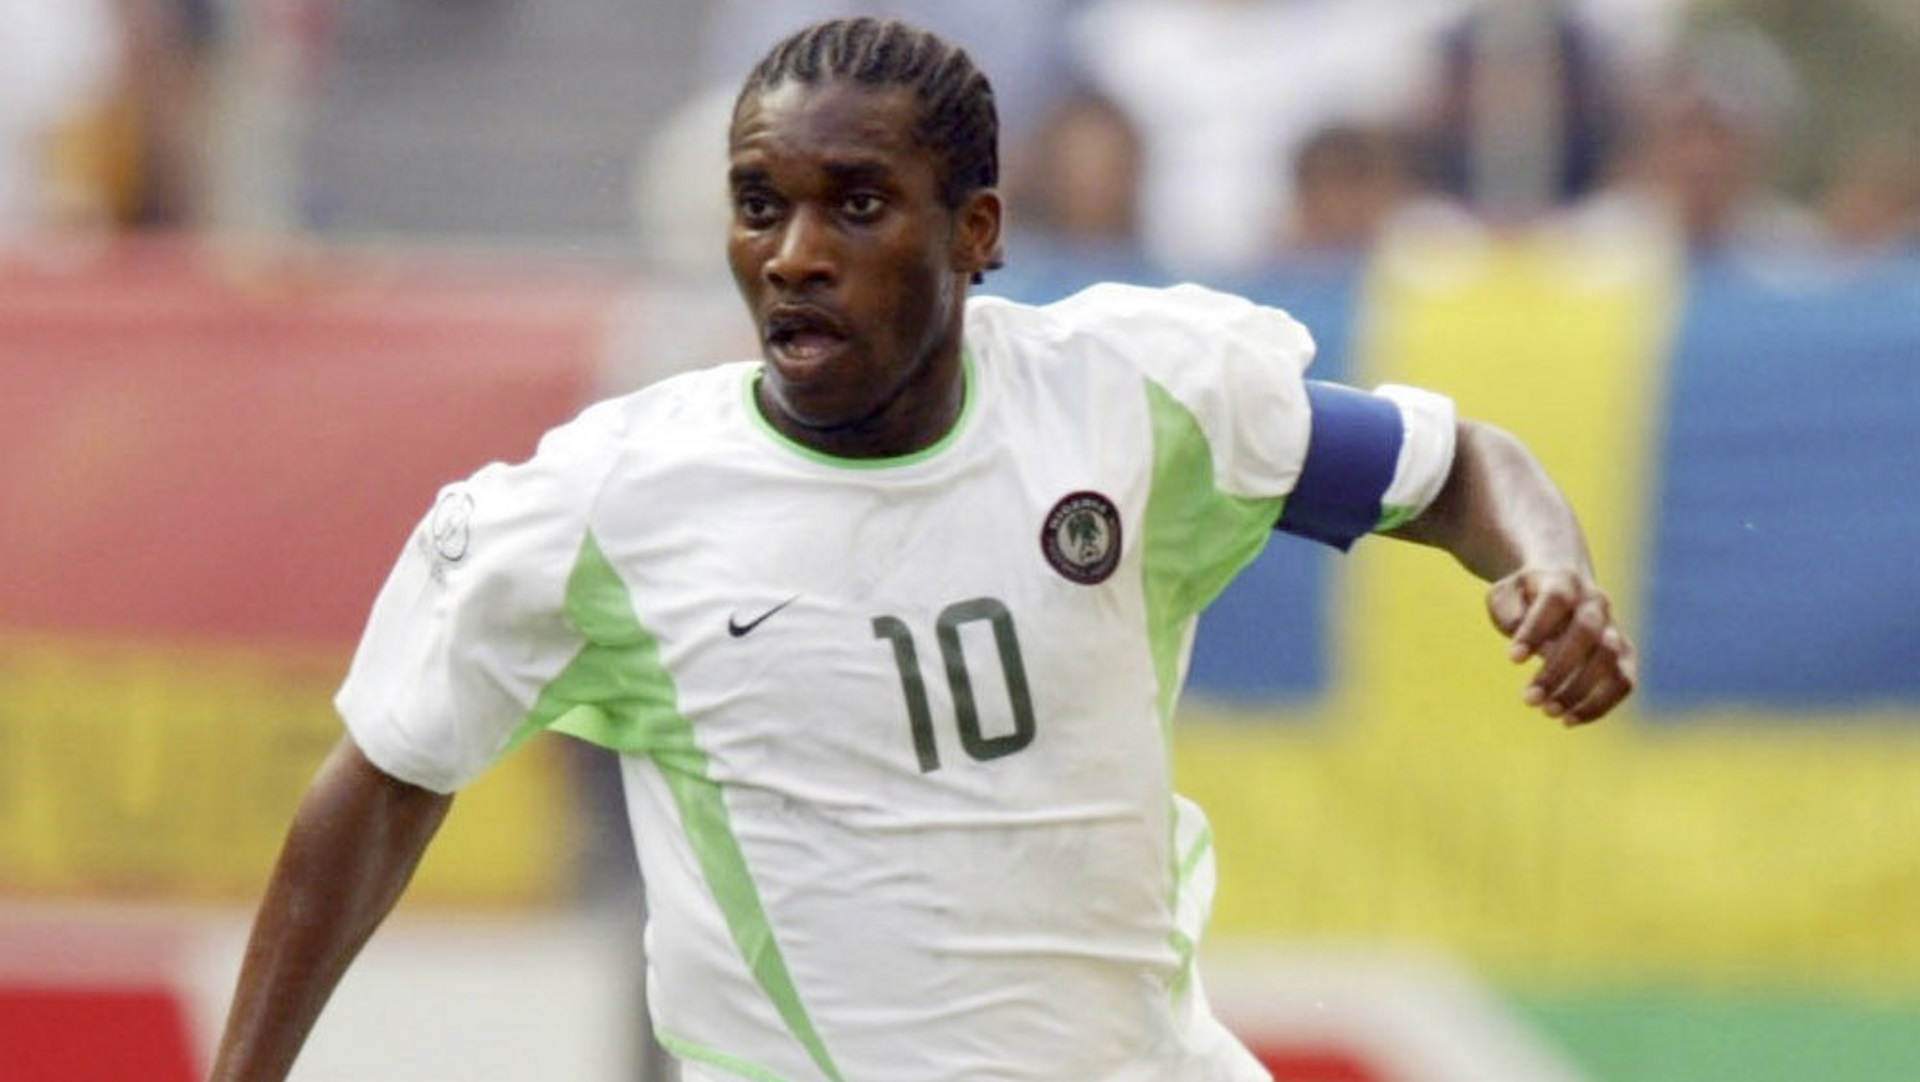 Eguavoen names Jay-Jay Okocha as the most skillful footballer